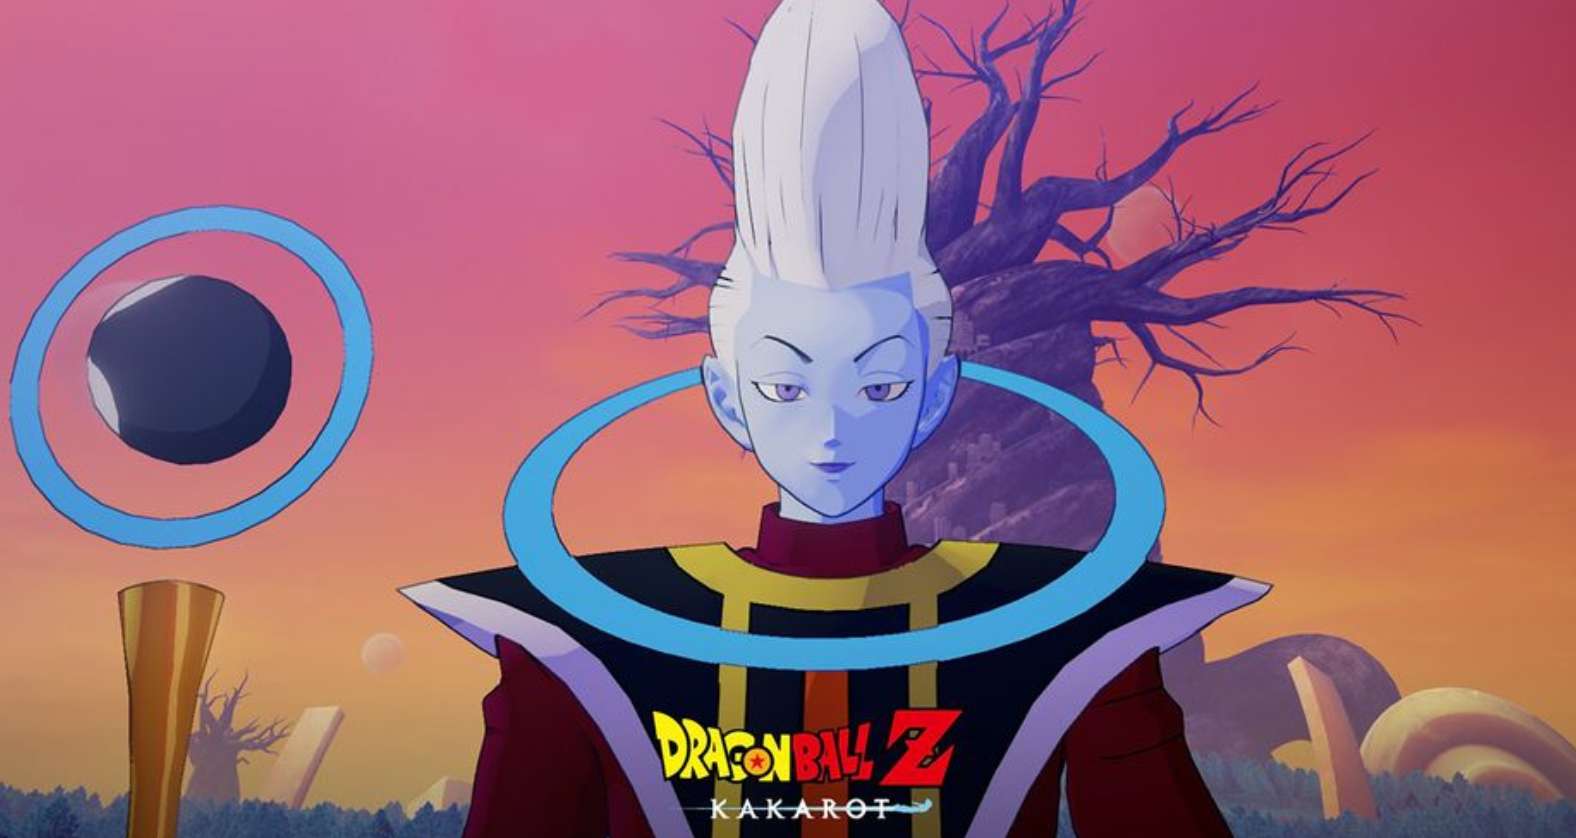 Dragon Ball Z: Kakarot Releases DLC Screen Shots Showing Off Whis, Beerus, And Super Saiyan God Goku And Vegeta